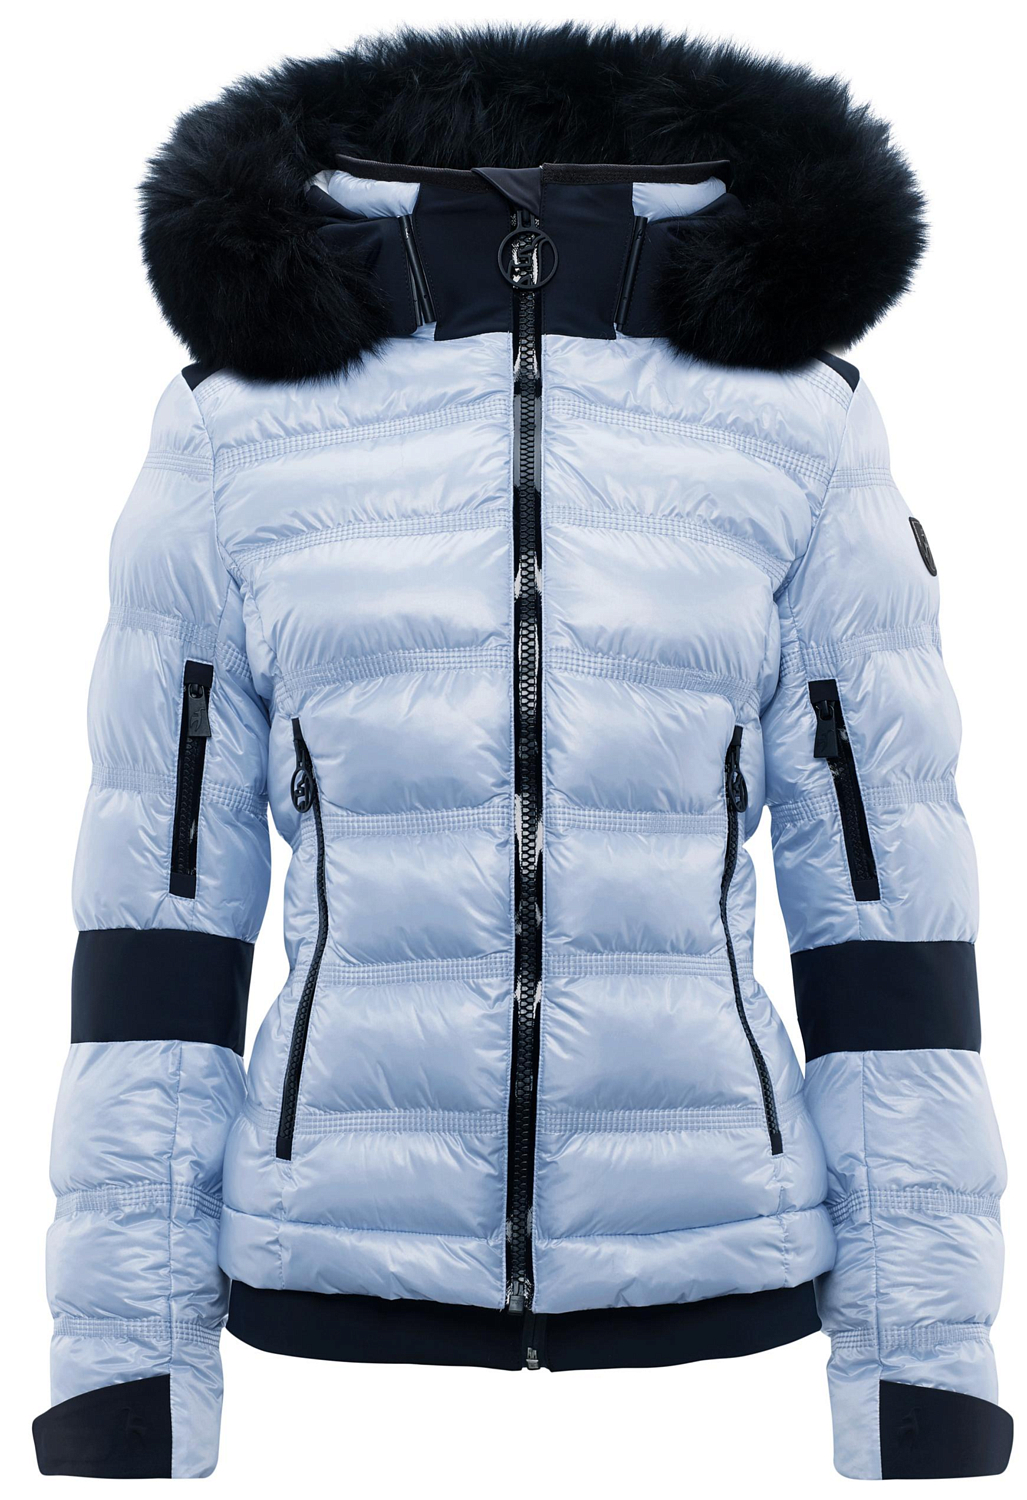 Куртка горнолыжная TONI SAILER 2020-21 Tami fur Cool ice